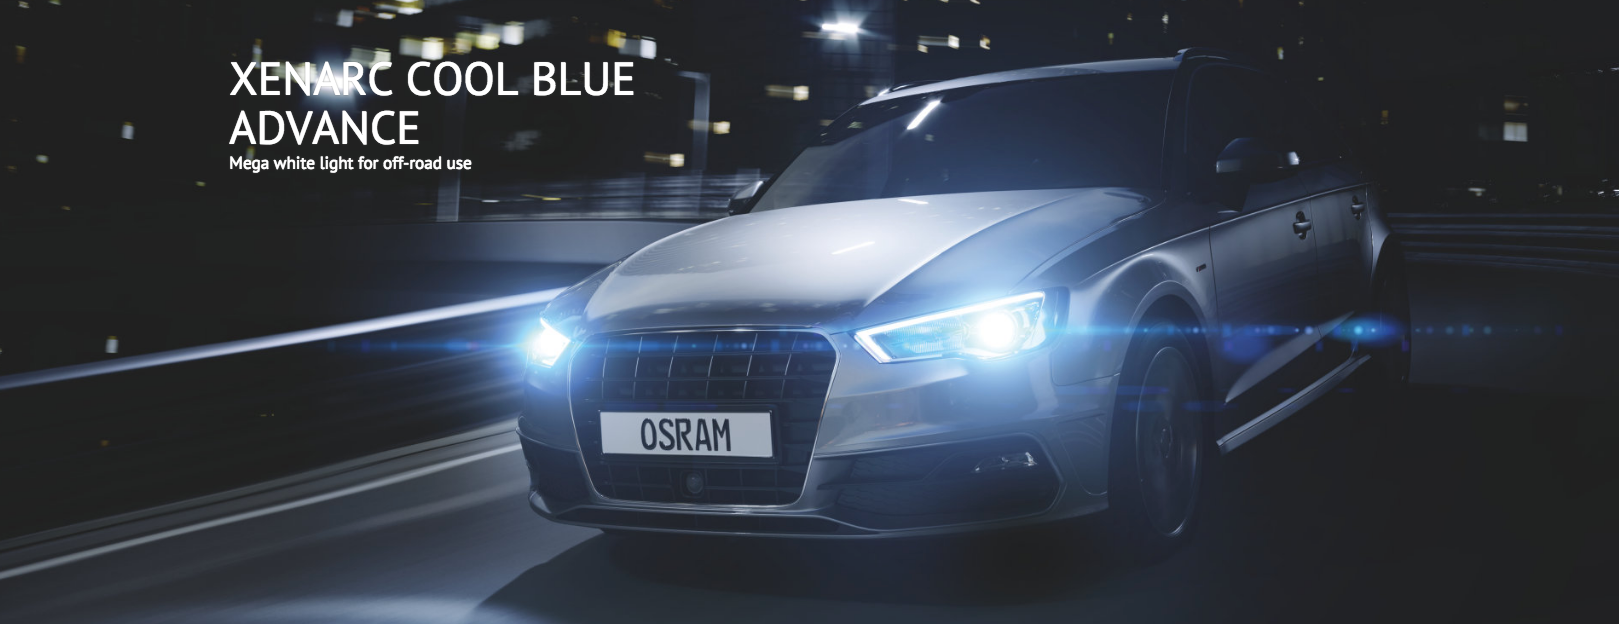 2 x OSRAM D2S CBI Cool Blue Intense Xenarc Light Xenon HID Headlight 6000K  DUO